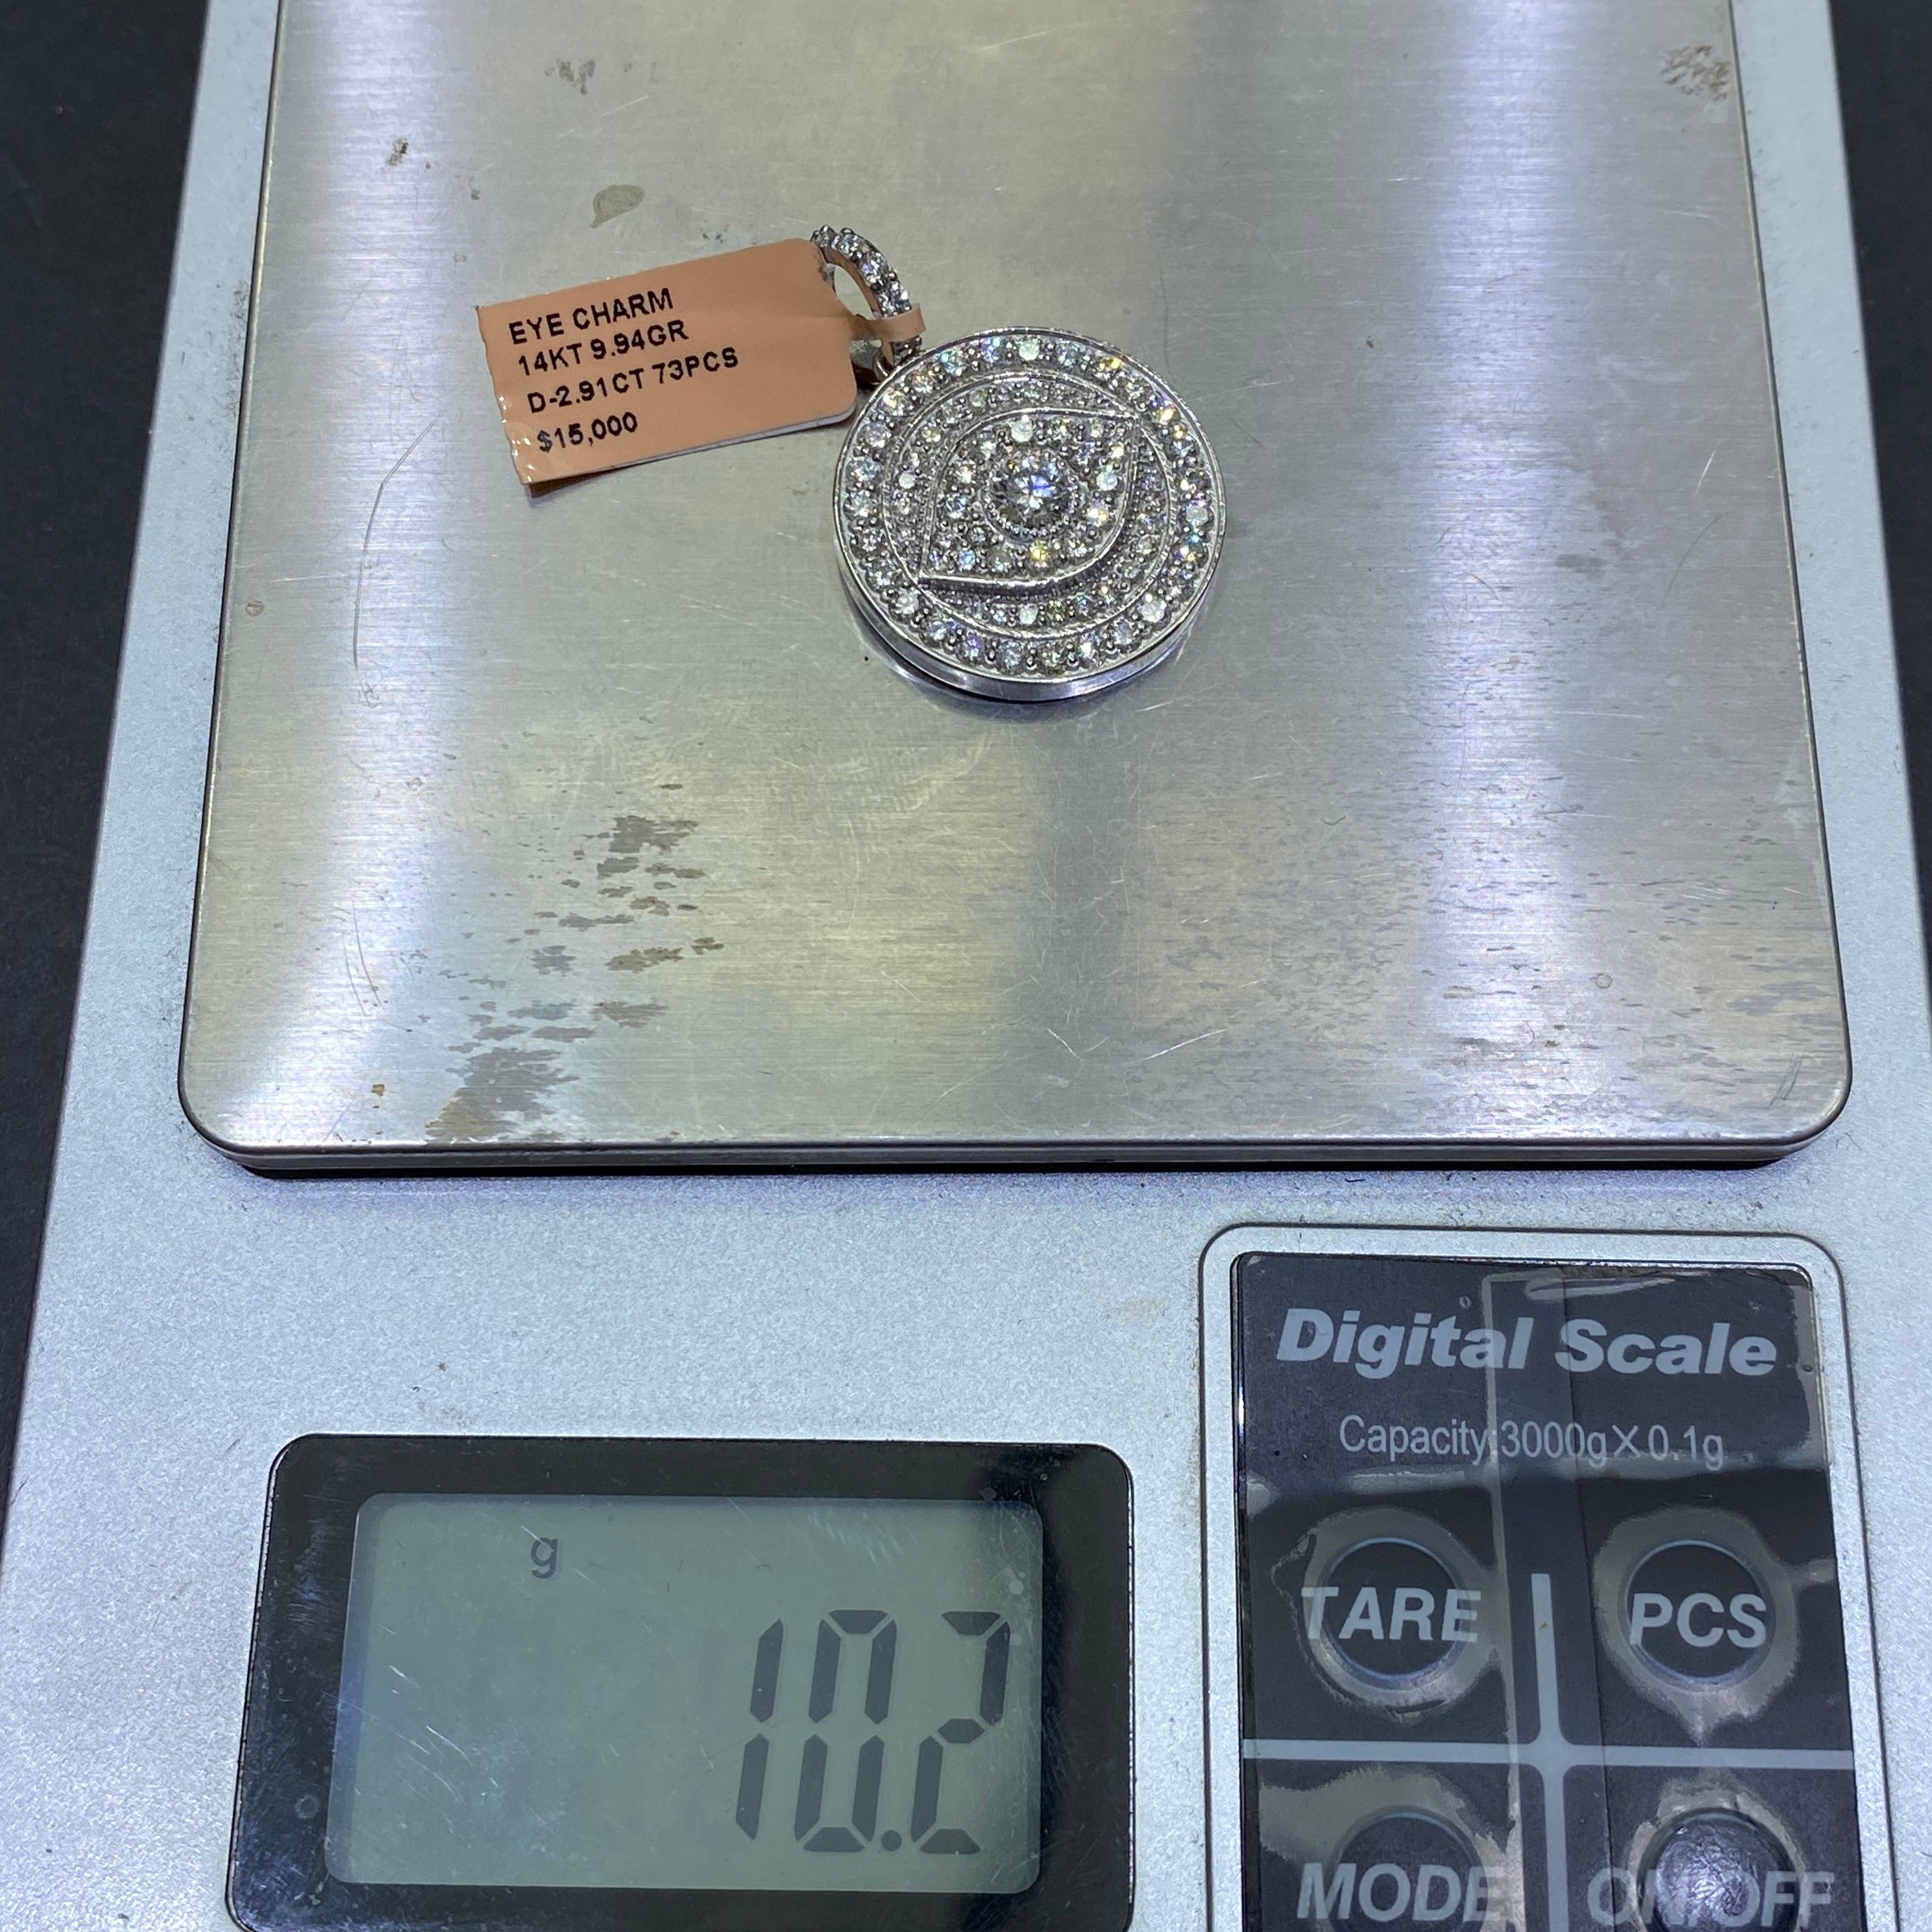 New14k “iced” 4cts Vs1 .50 carat center stone Eye pendant